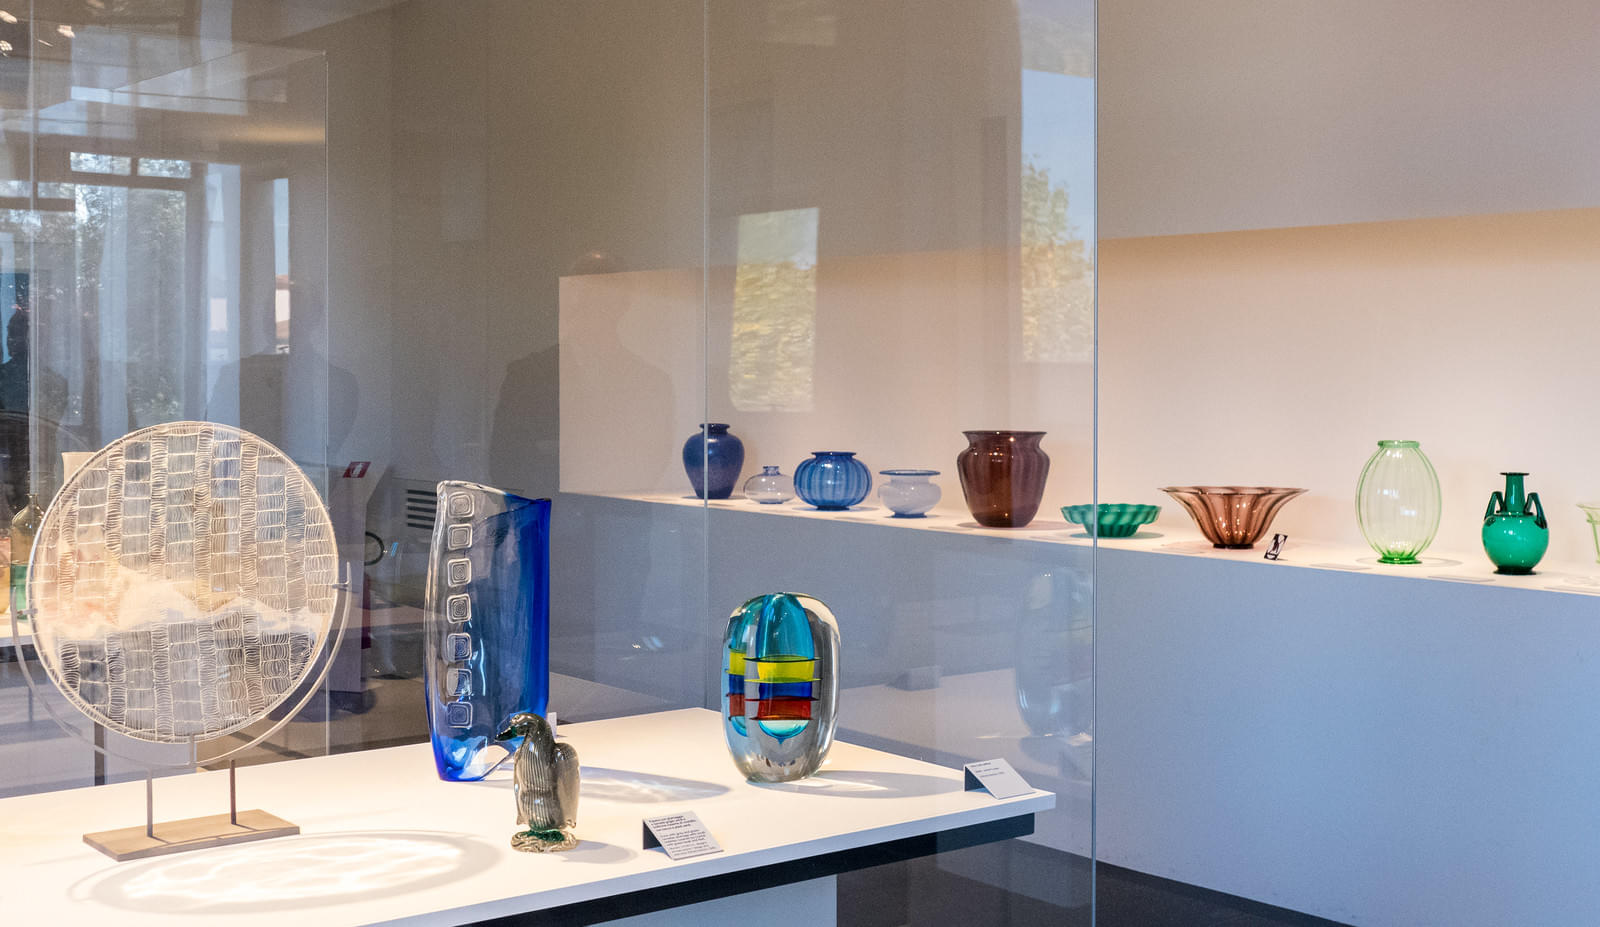 Glass Museum (Murano) Overview